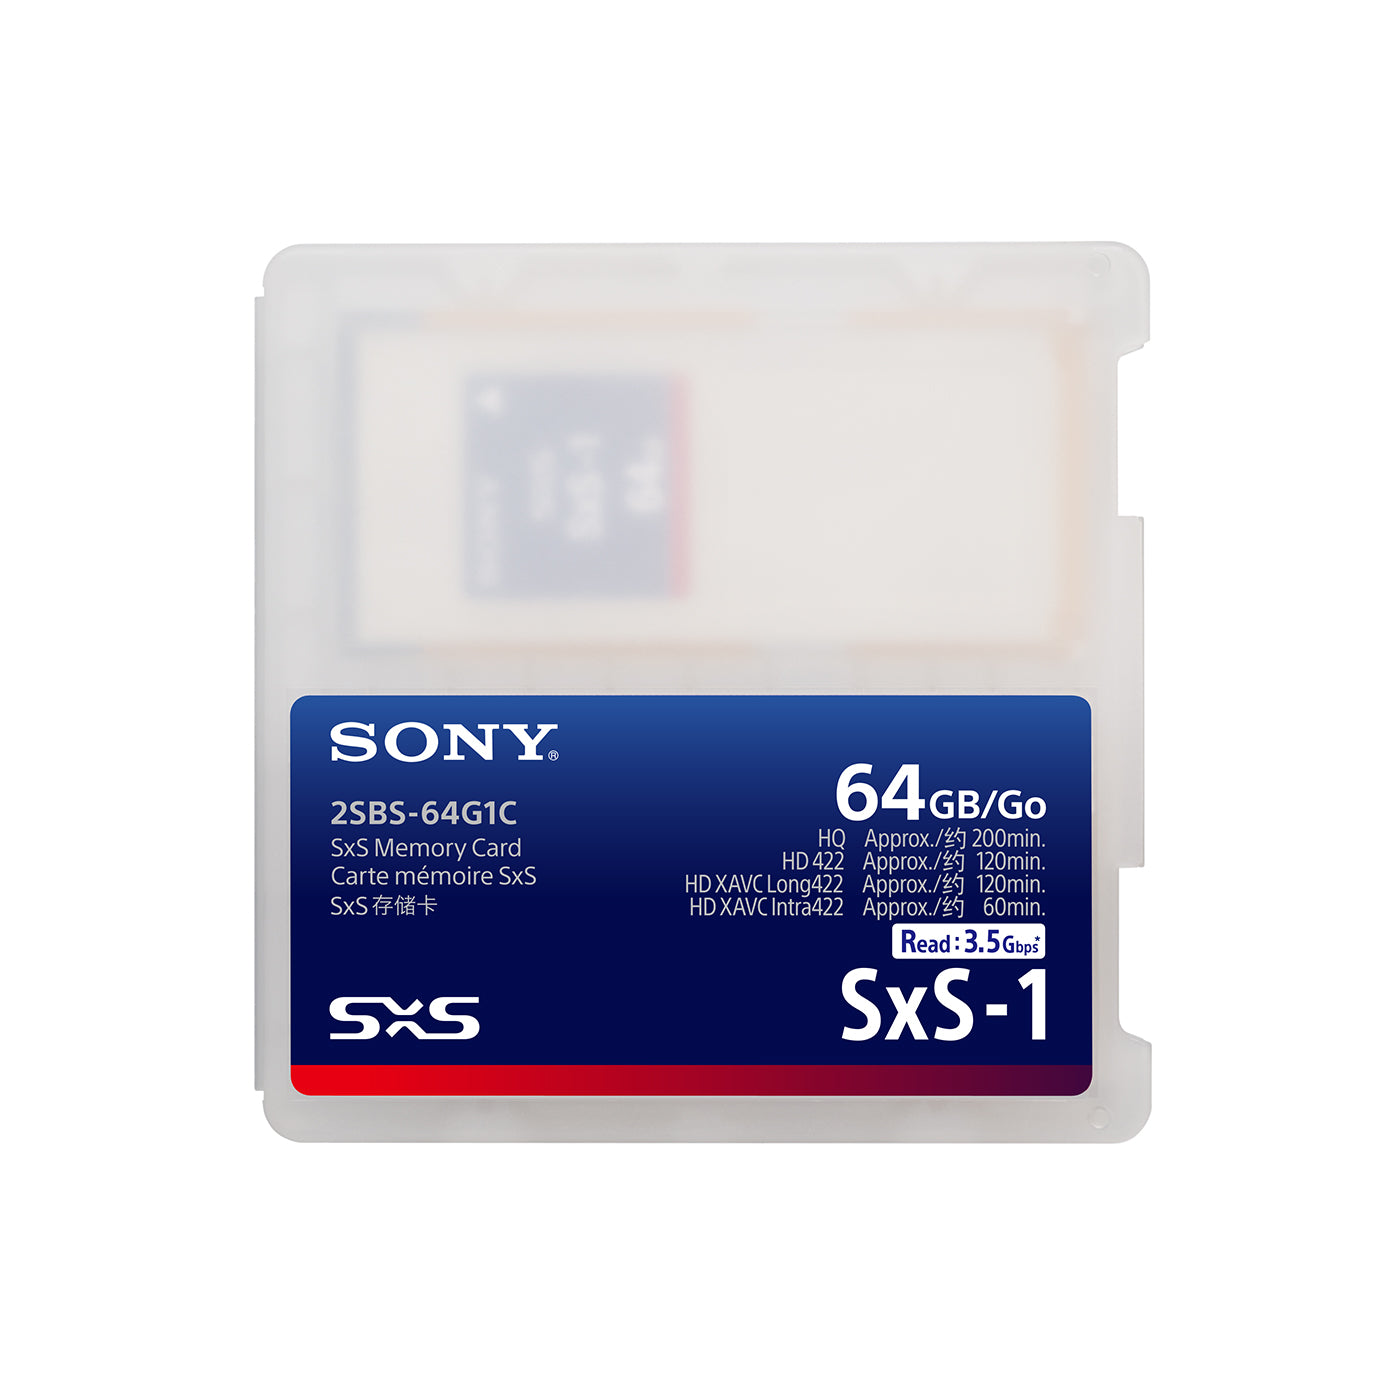 SXS-1 Memory Card 64GB